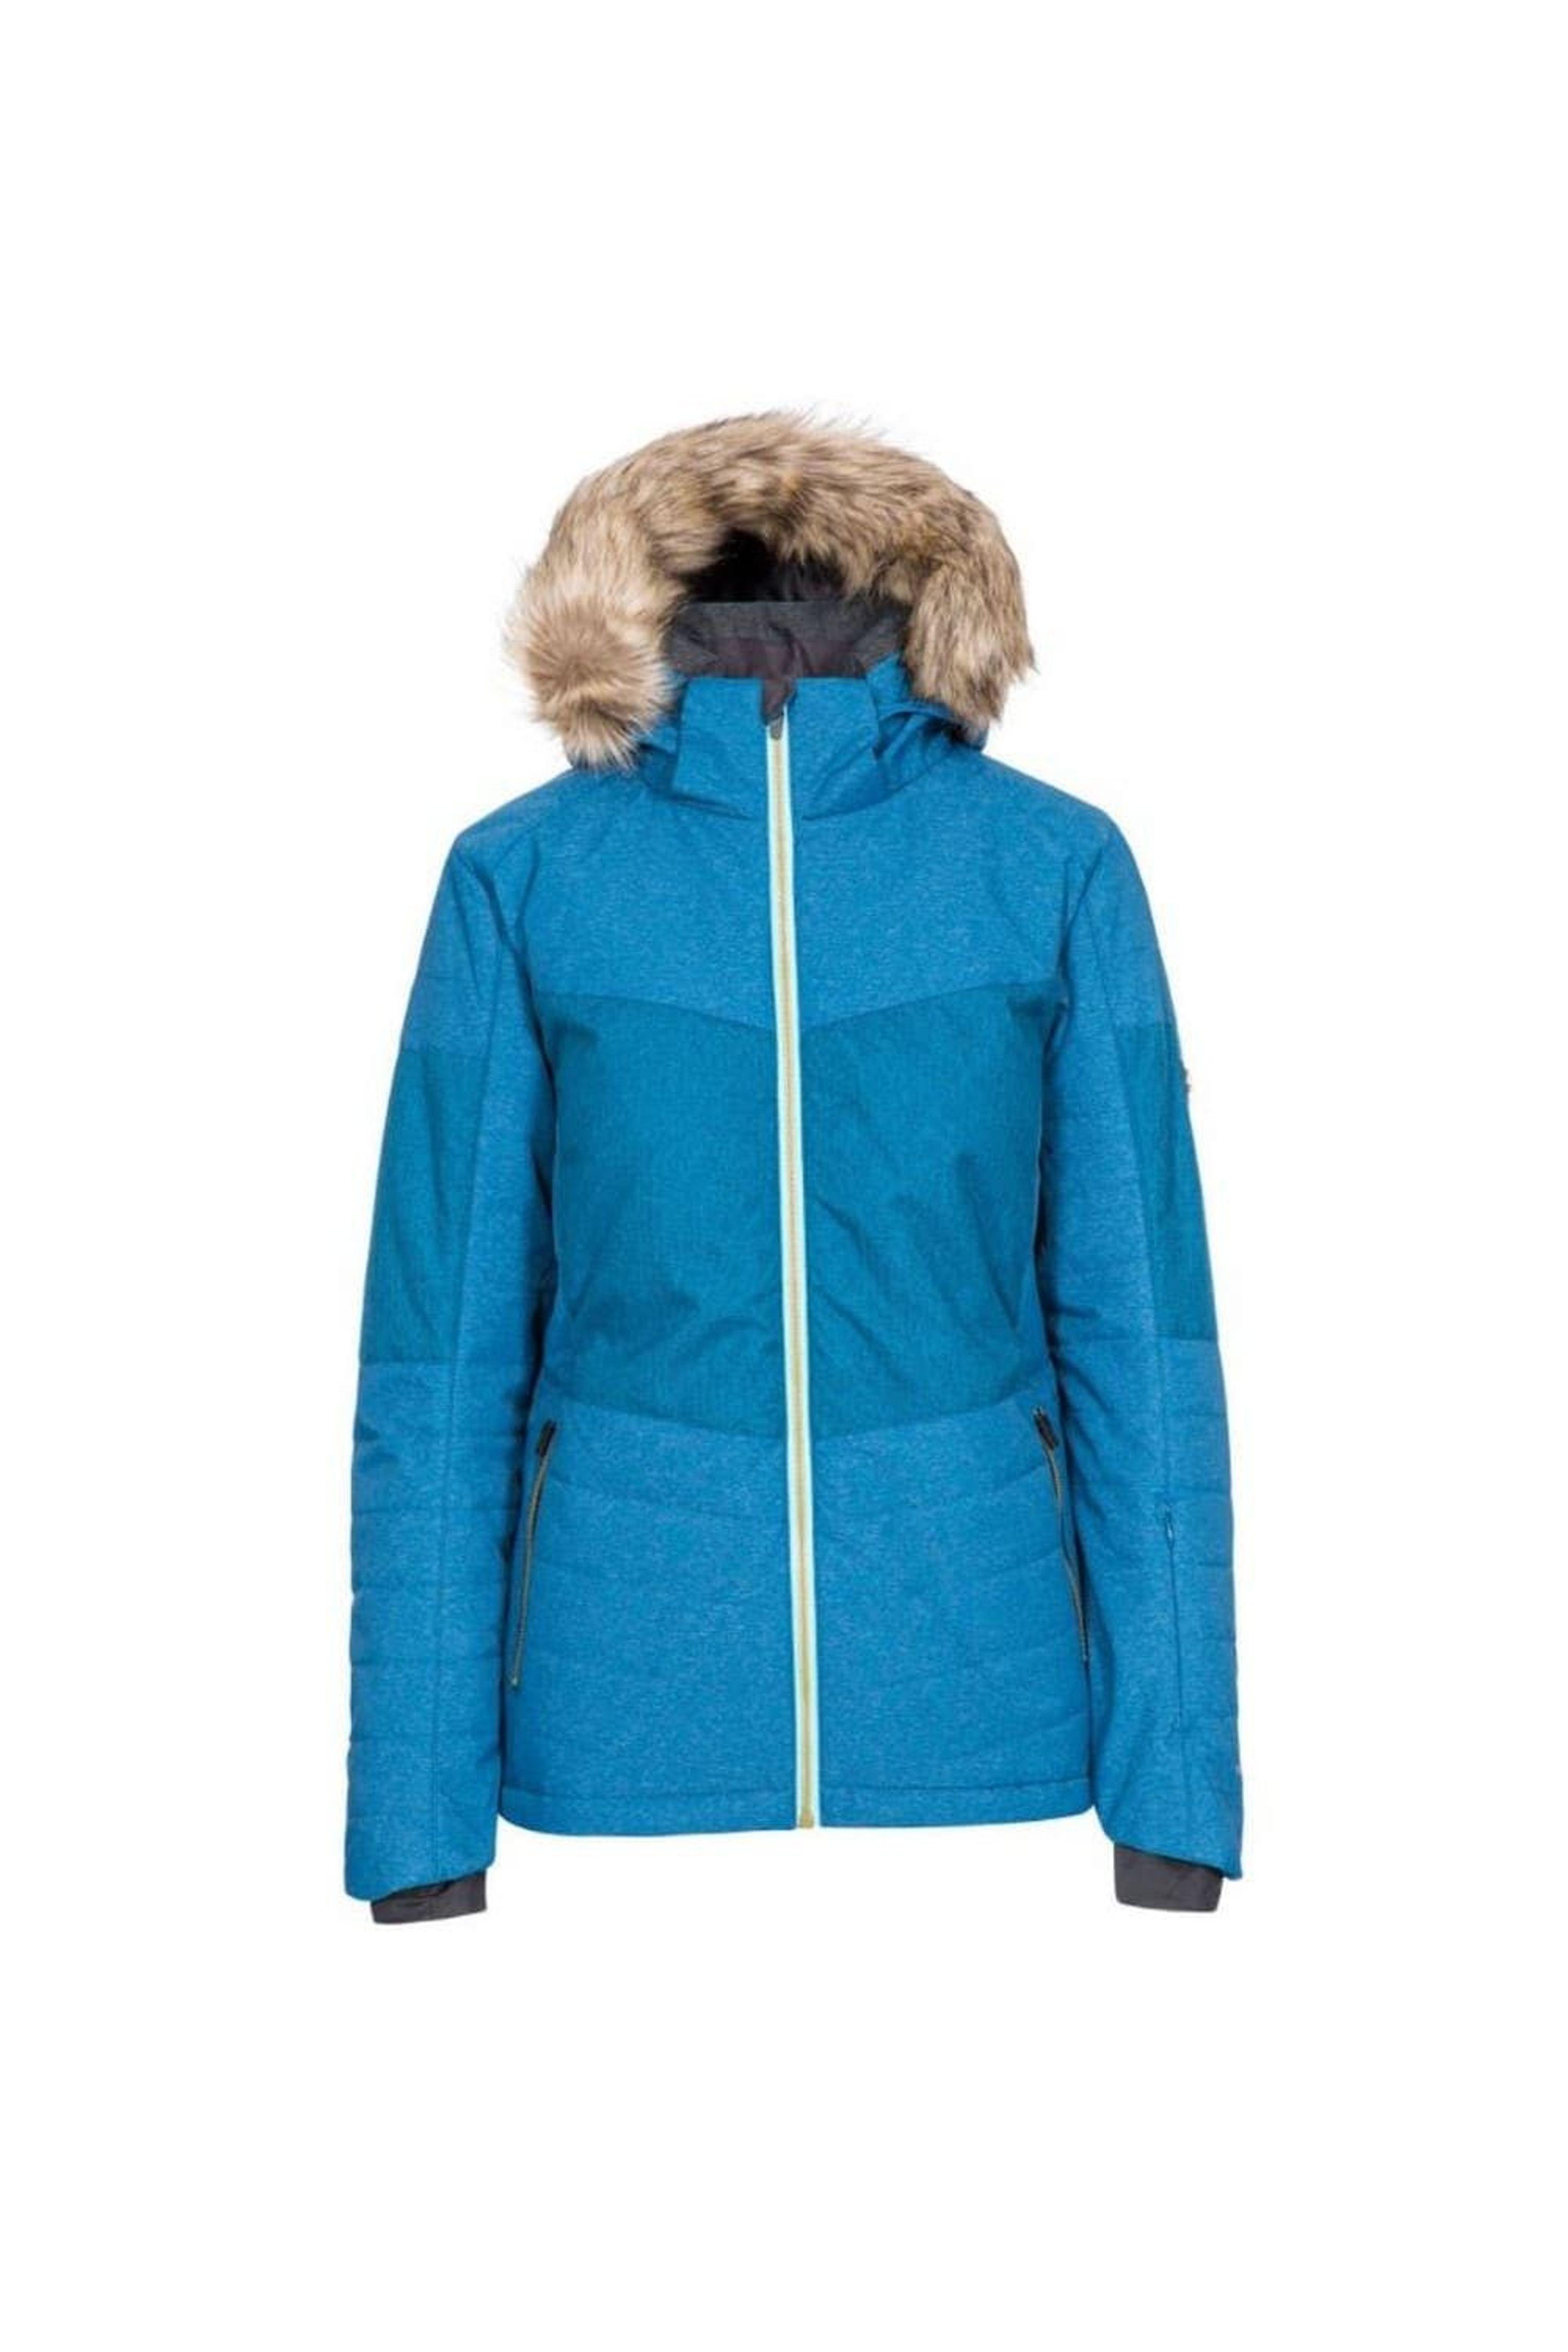 Trespass Tiffany Ski Jacket in Blue | Lyst